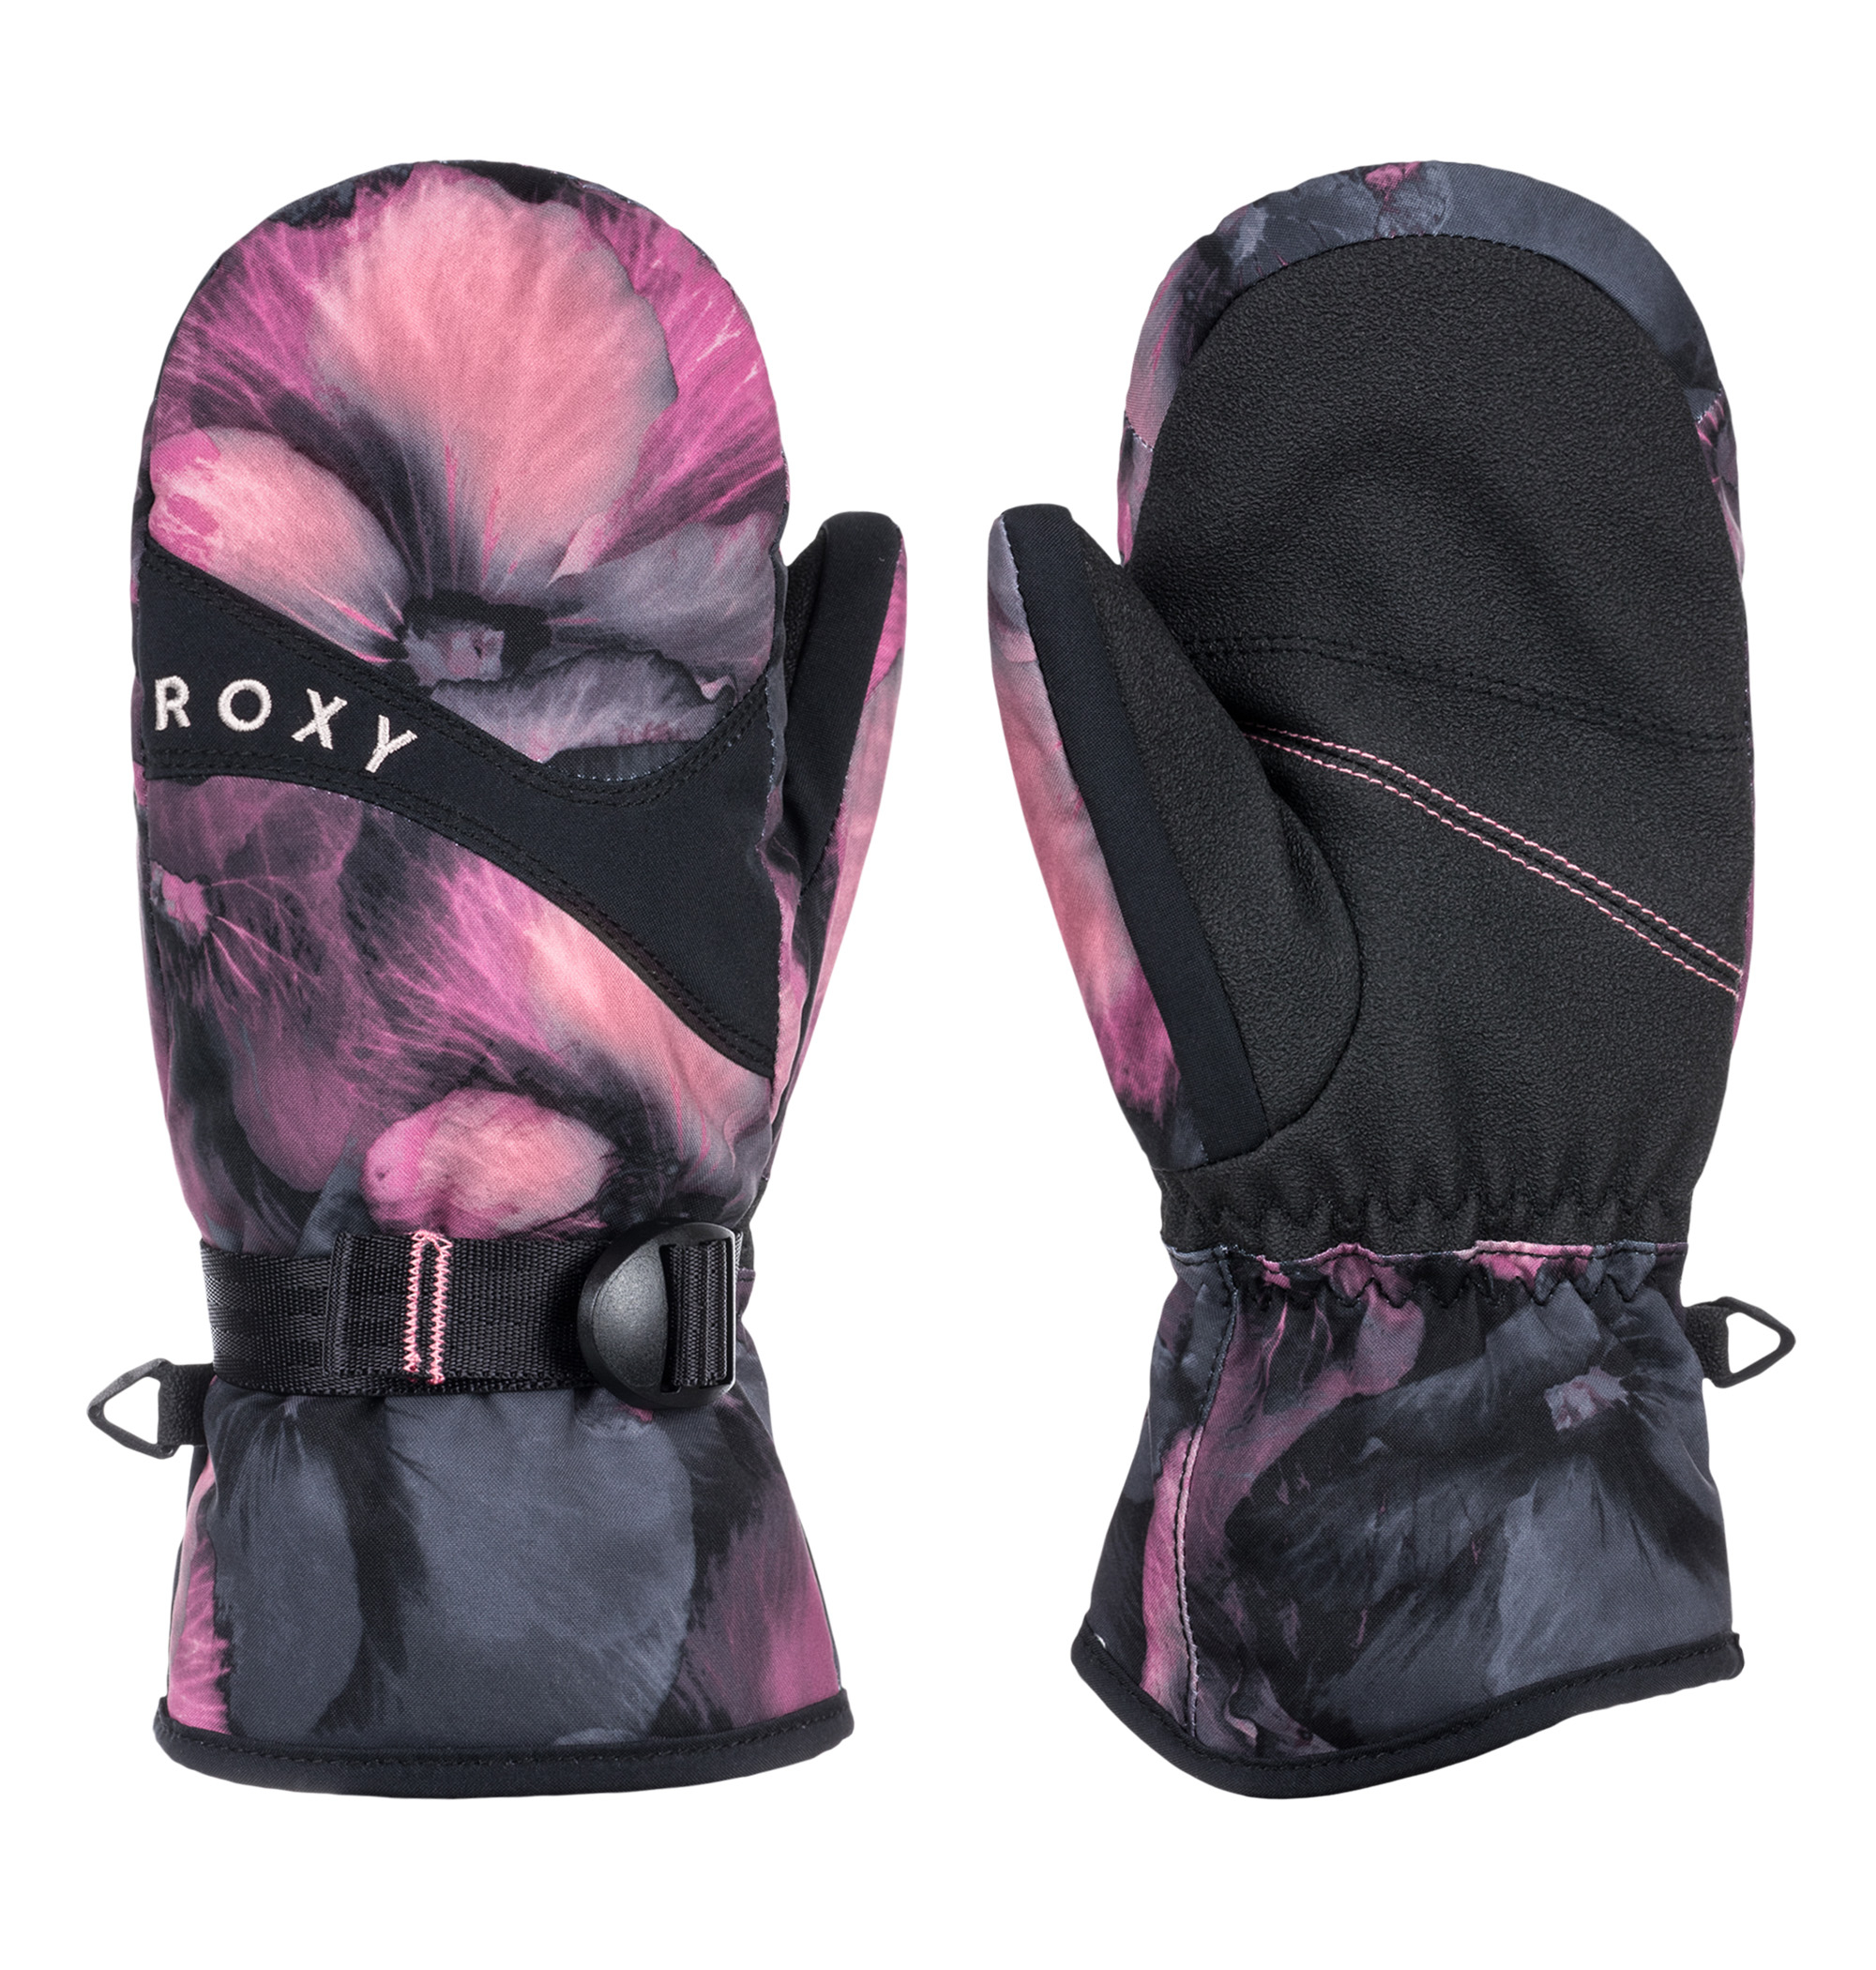 30%OFF セール SALE Roxy ロキシー キッズ グローブ (130-150cm向け) ROXY JETTY GIRL MITT テックグローブ スキー スノボ